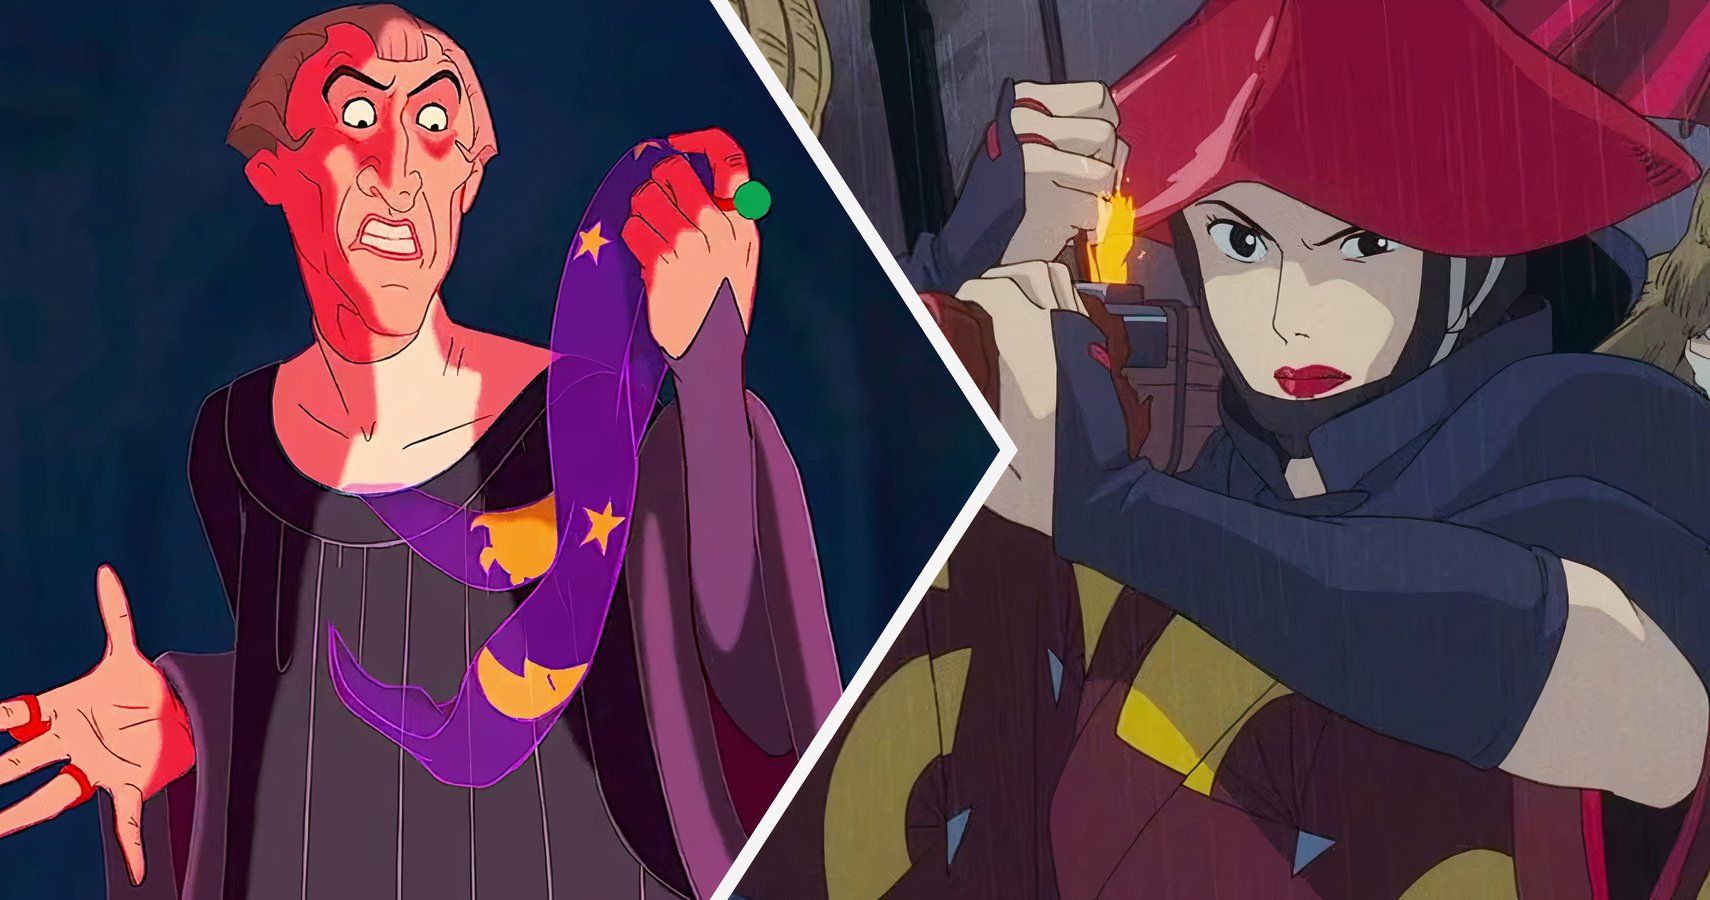 Split image of Disney's Judge Frollo and Studio Ghibli's Lady Eboshi